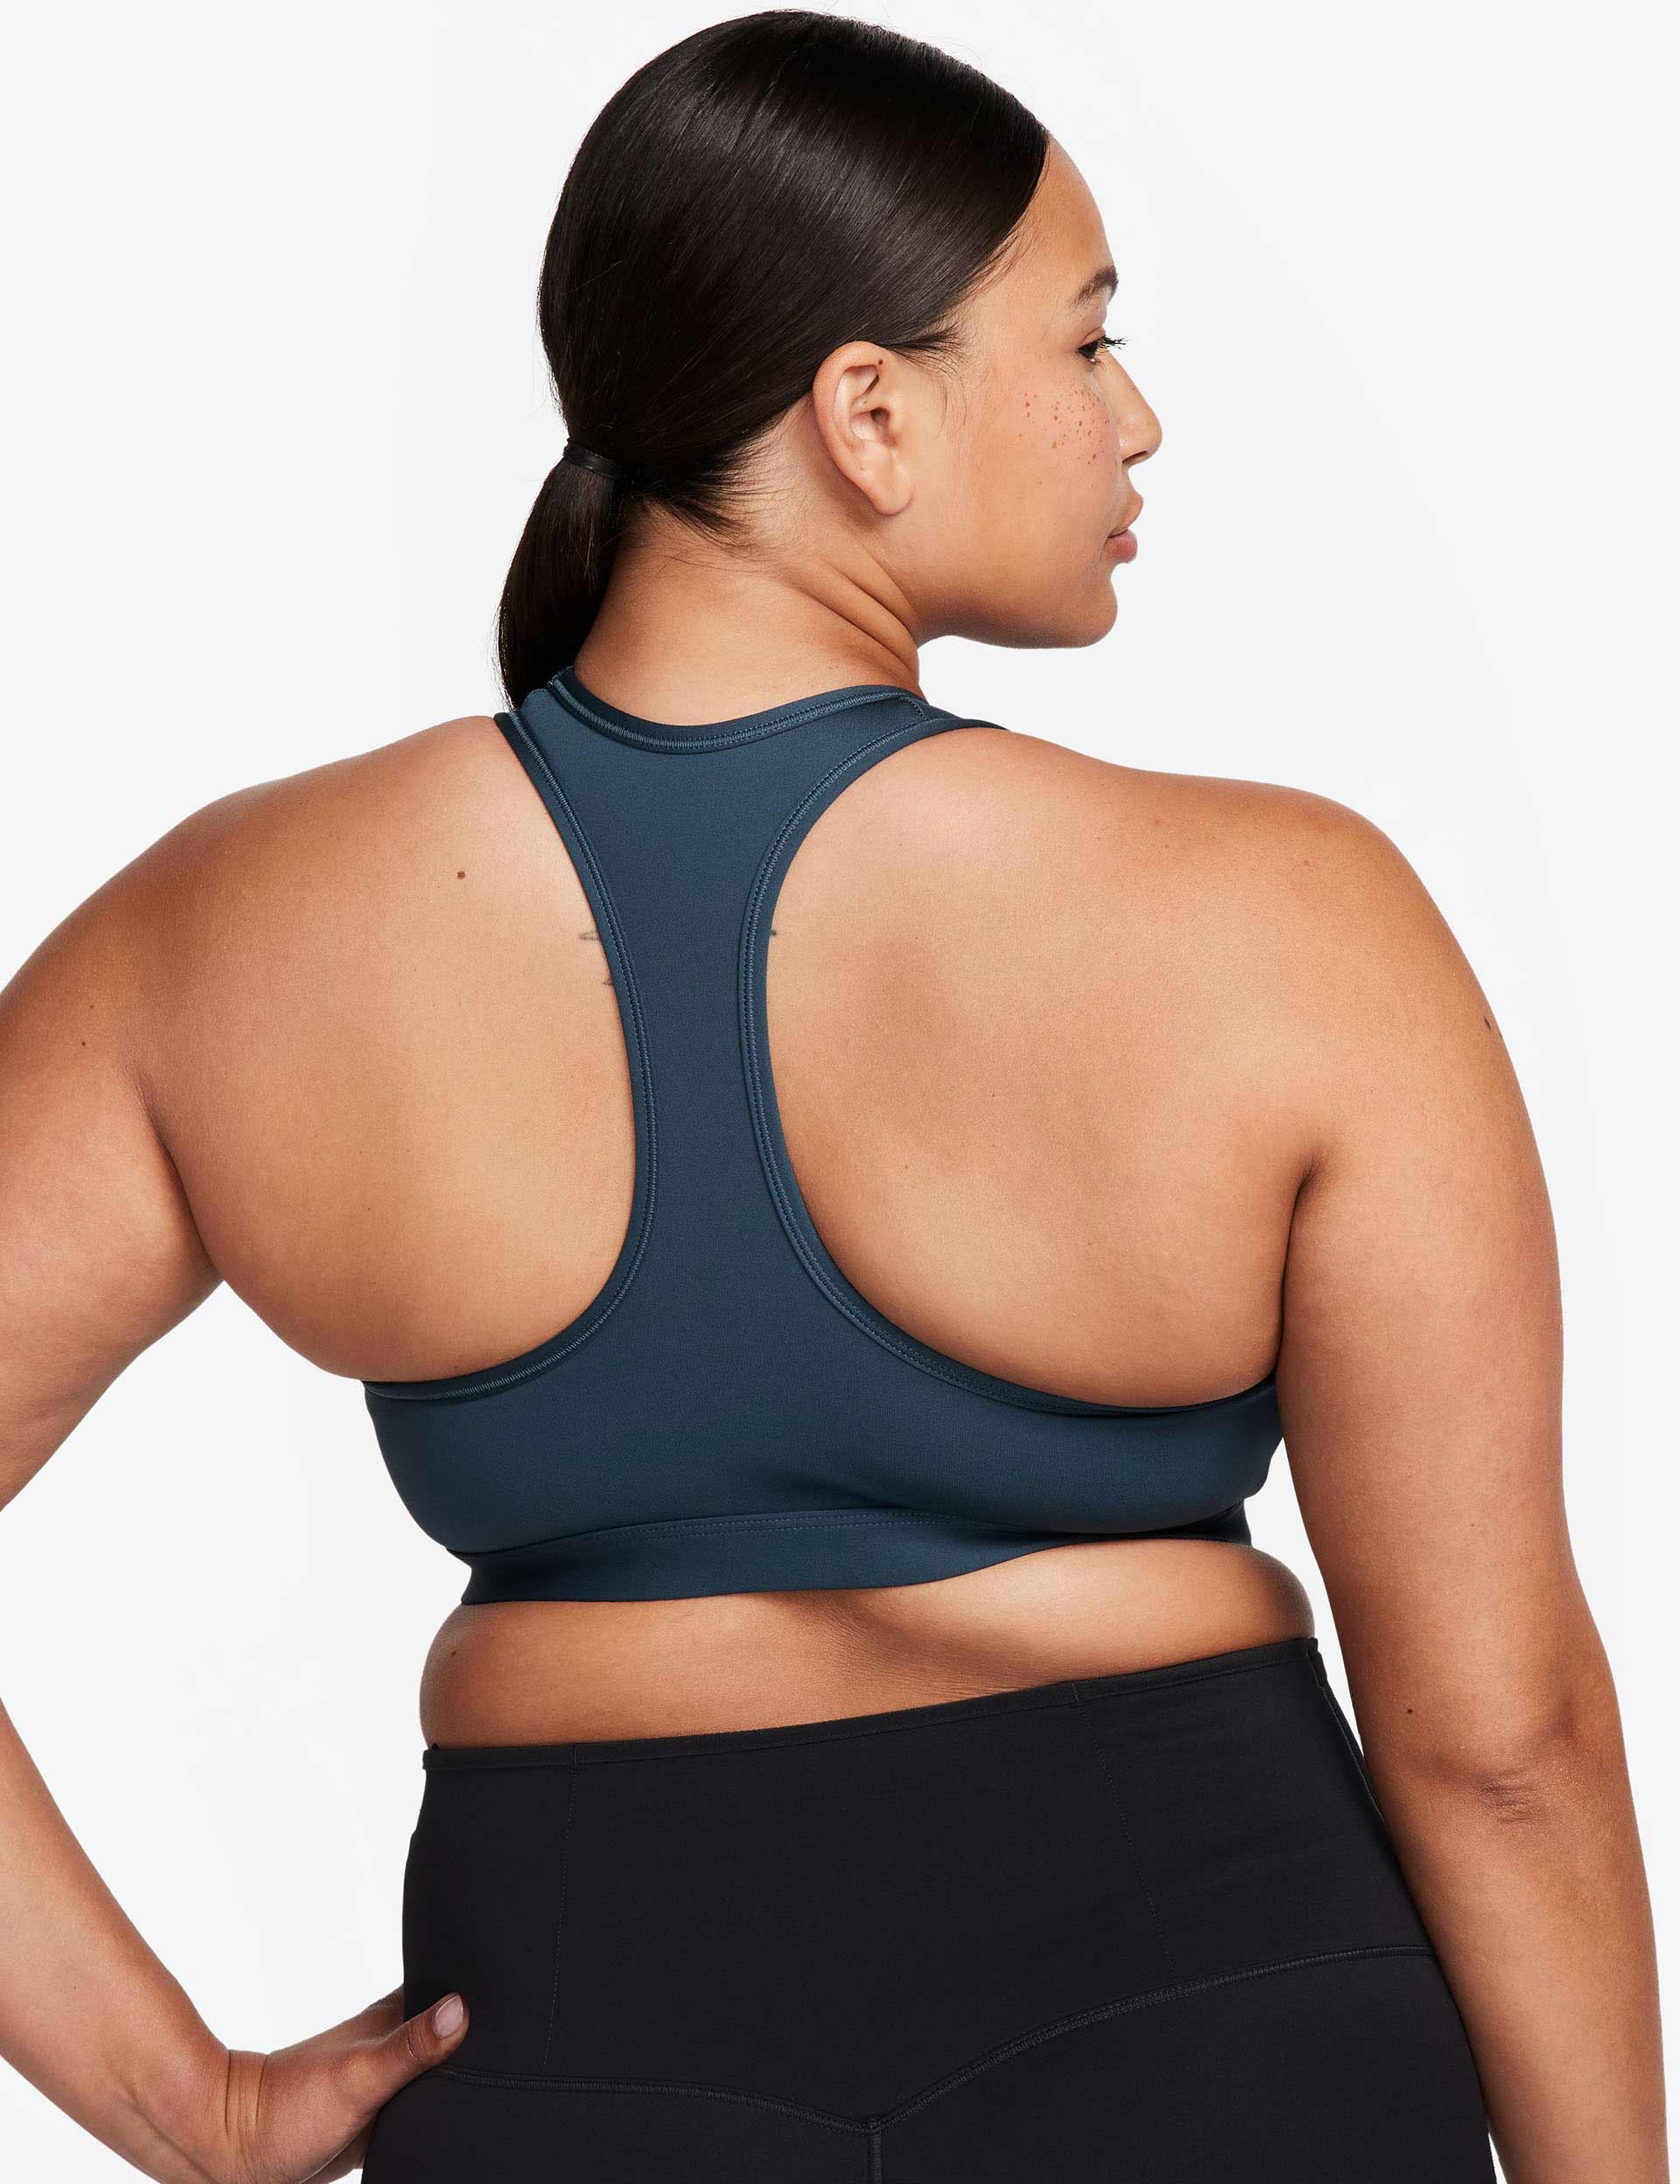 Nike Women's Medium Support Black and White Sports Bra Size